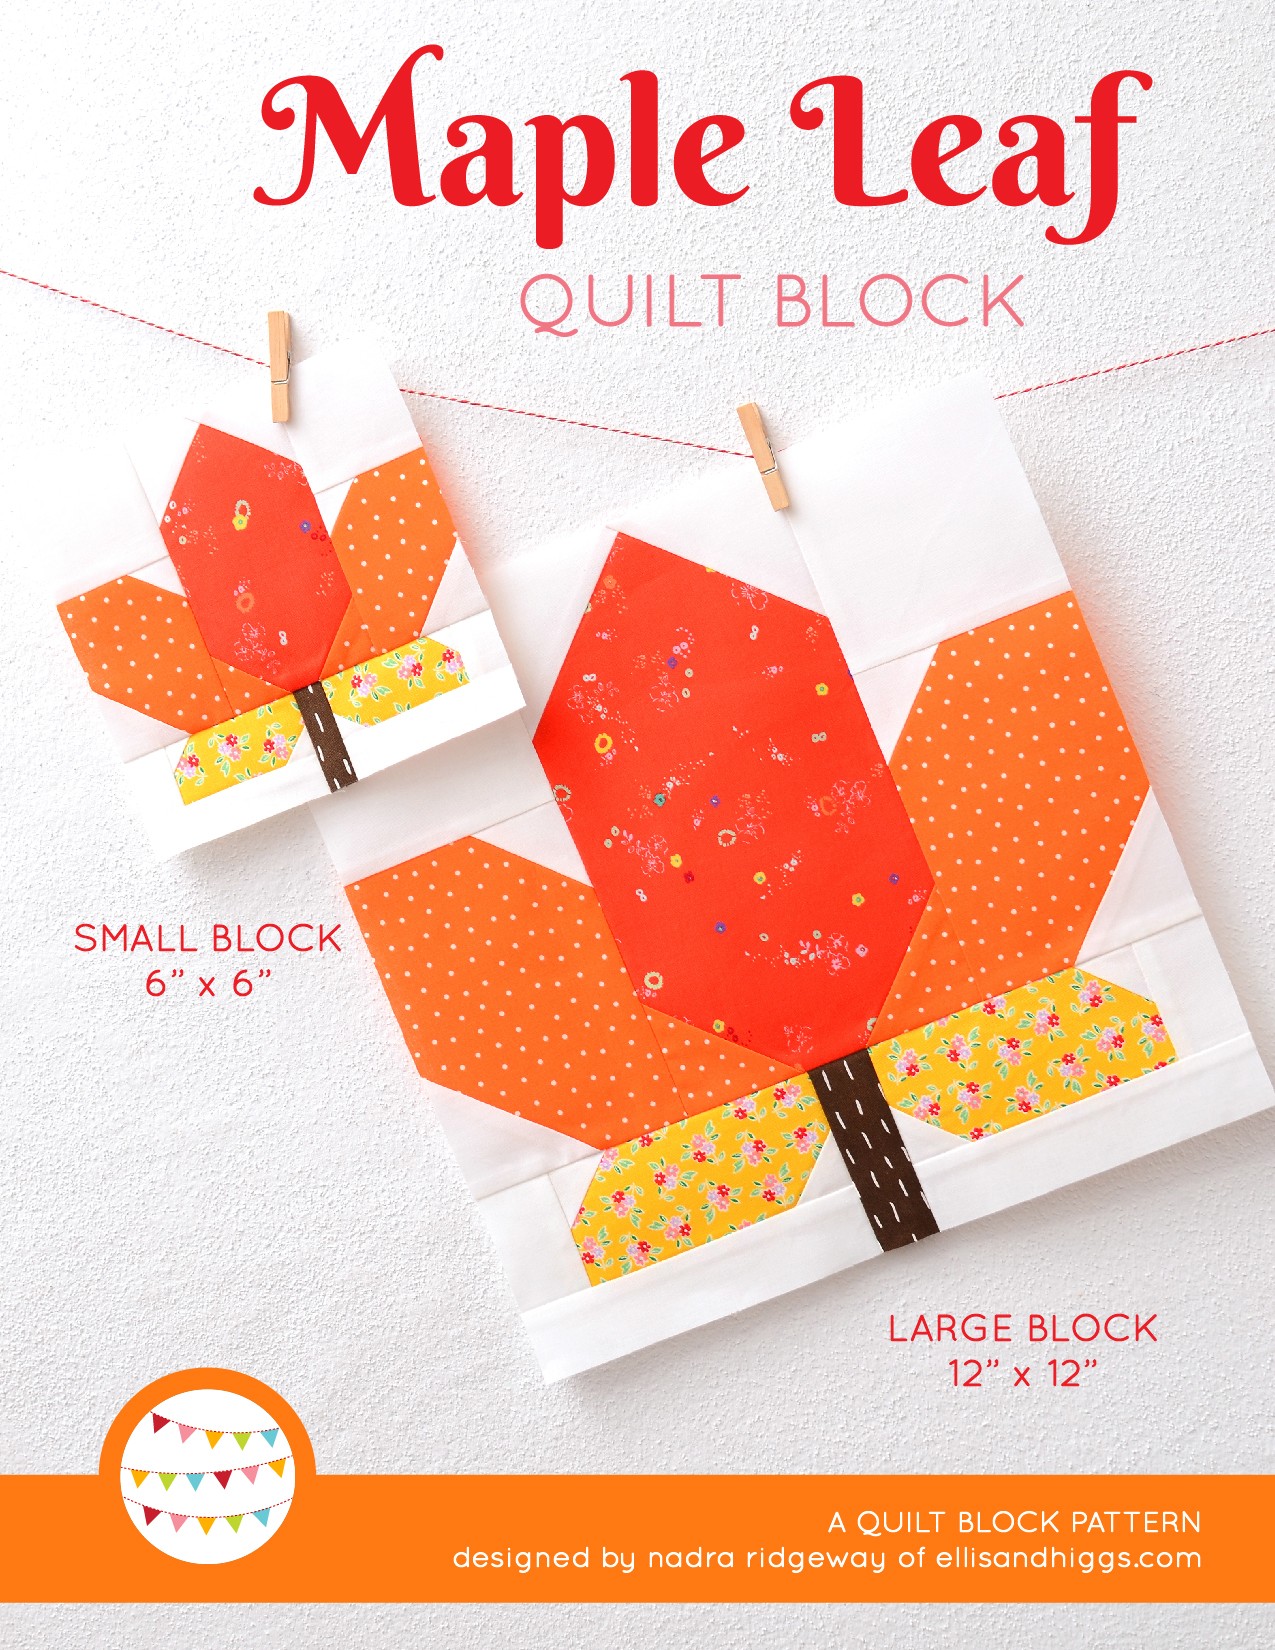 New Fall Quilt Patterns by Nadra Ridgeway of ellis & higgs - Maple Leaf Quilt Block